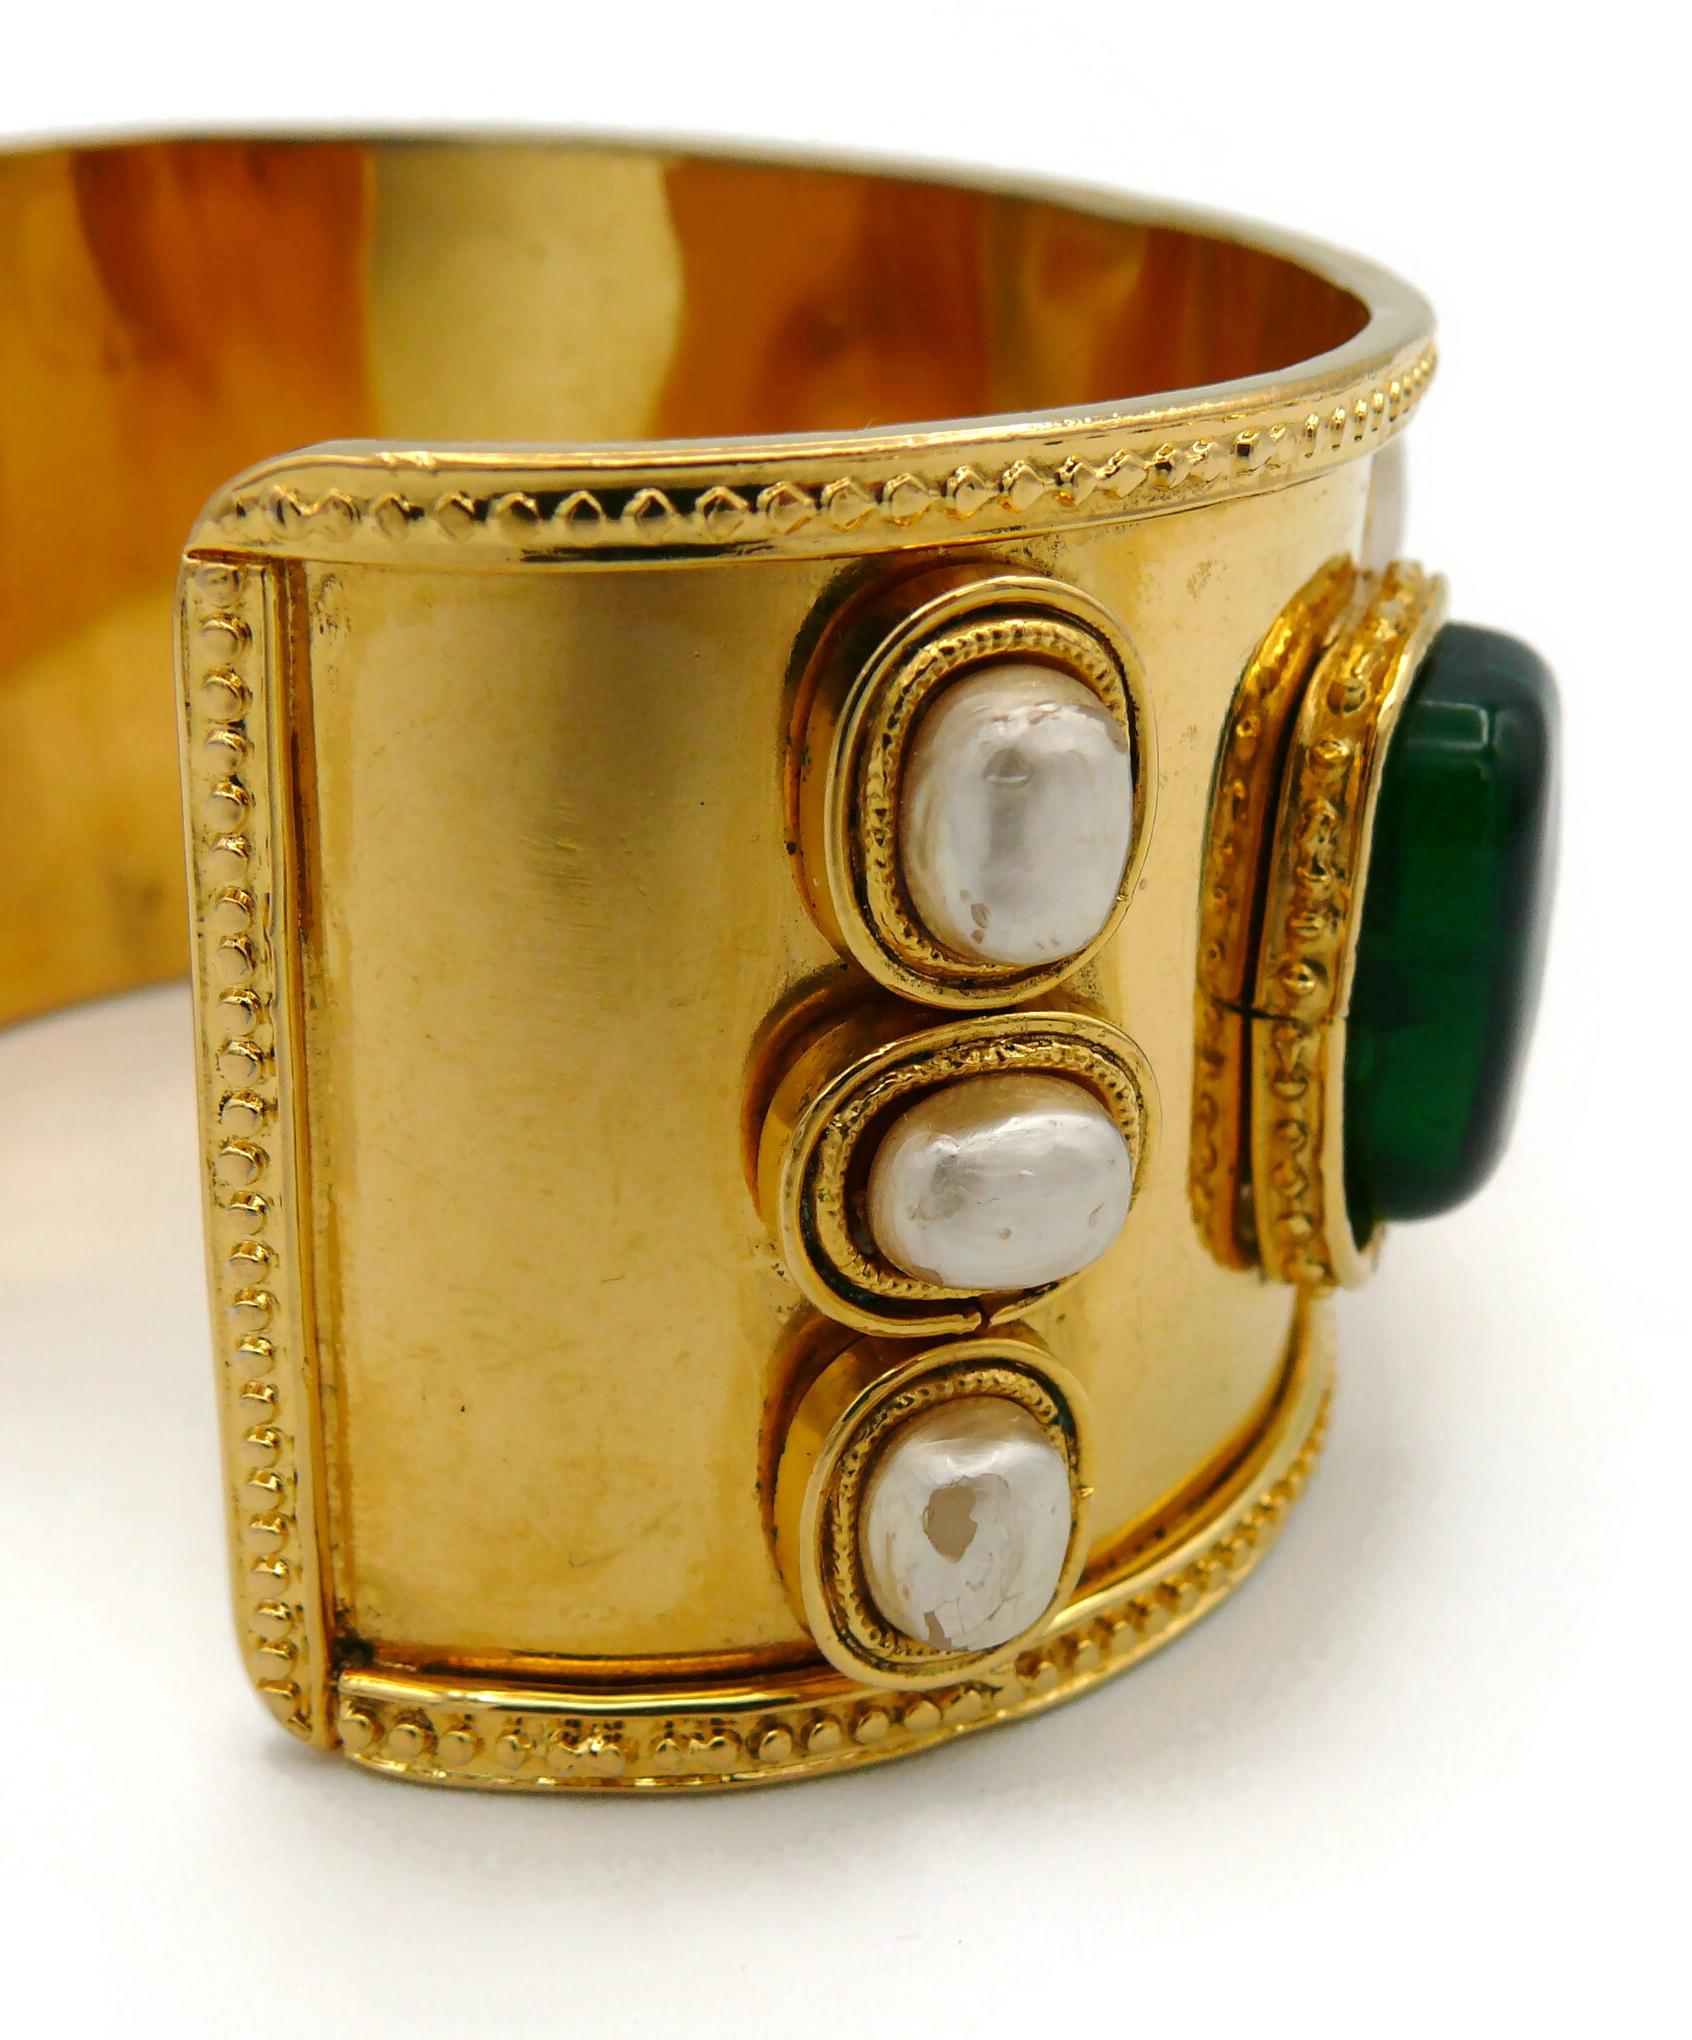 CHANEL Vintage Byzantine Inspired Gripoix Cuff Bracelet, 1990 For Sale 7